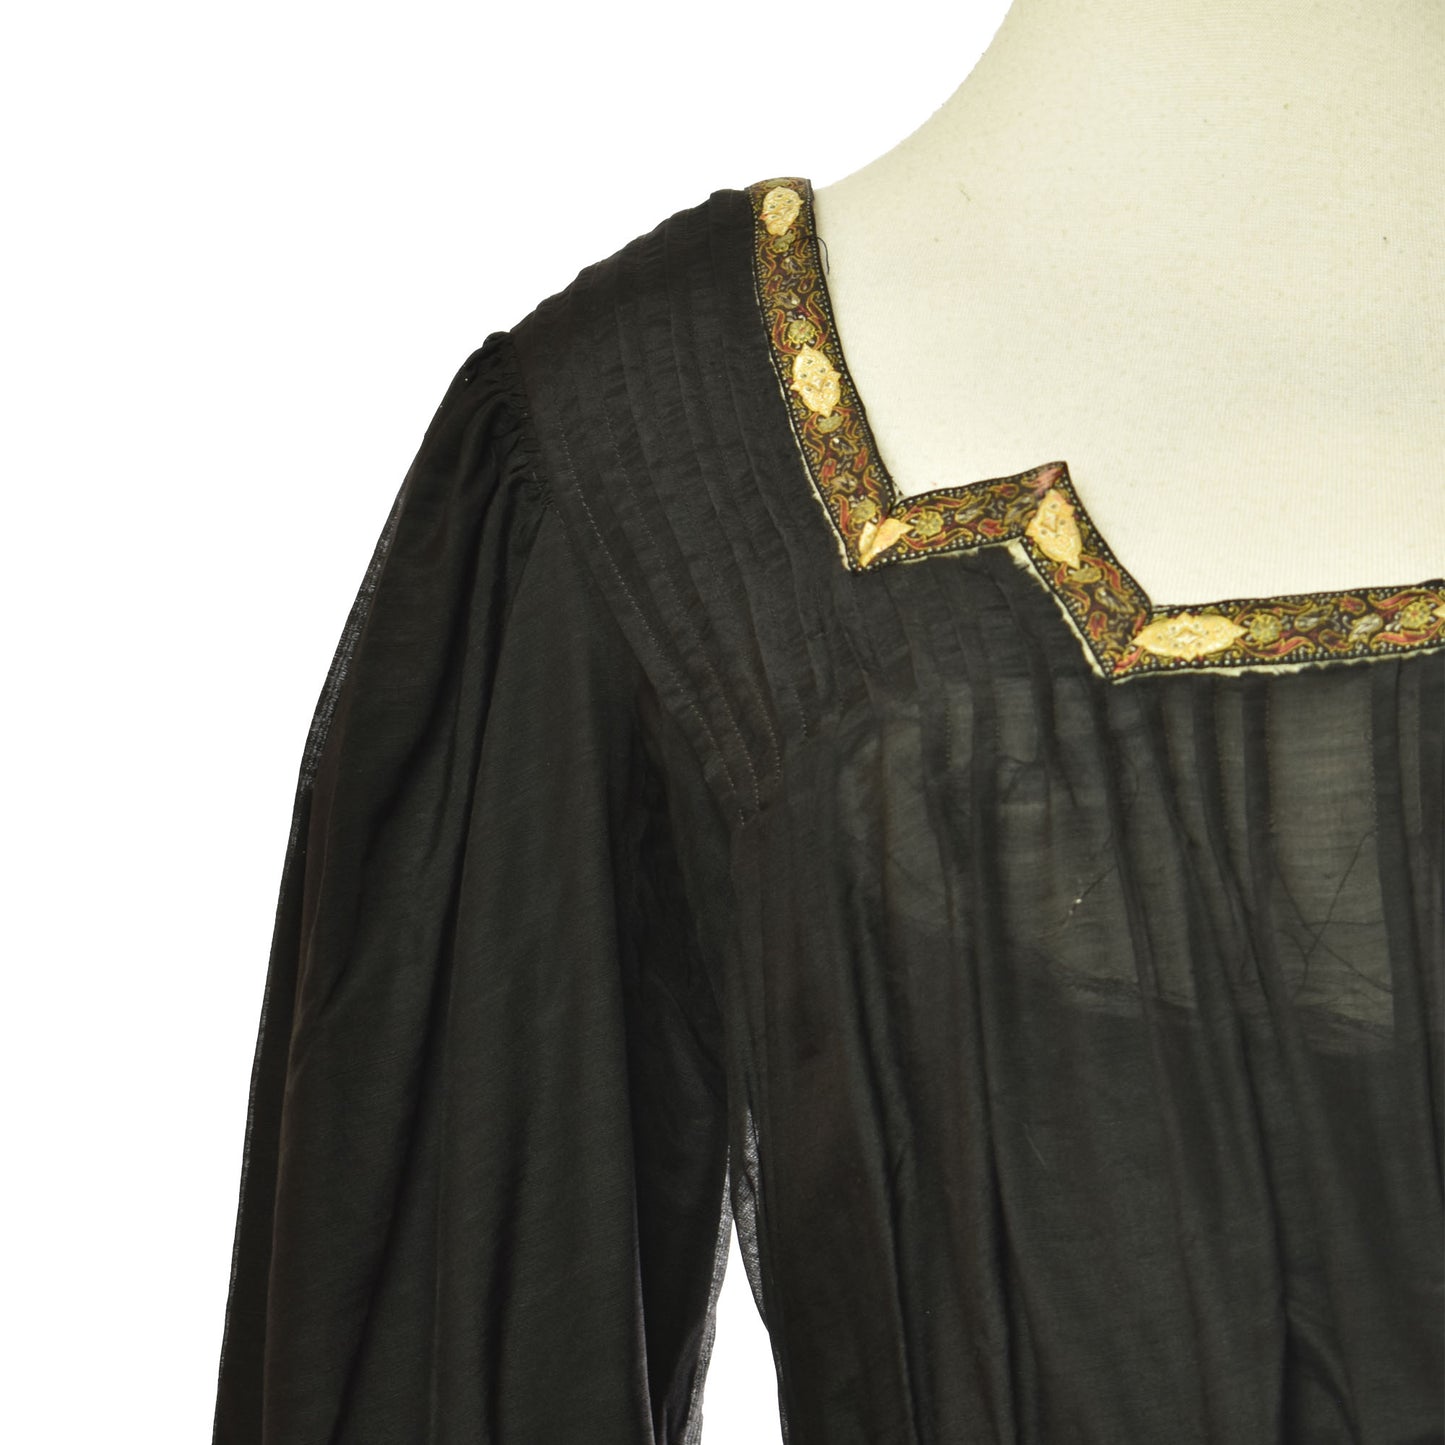 Antique 1800s Victorian Mourning Wear - Edwardian Black Bodice Blouse